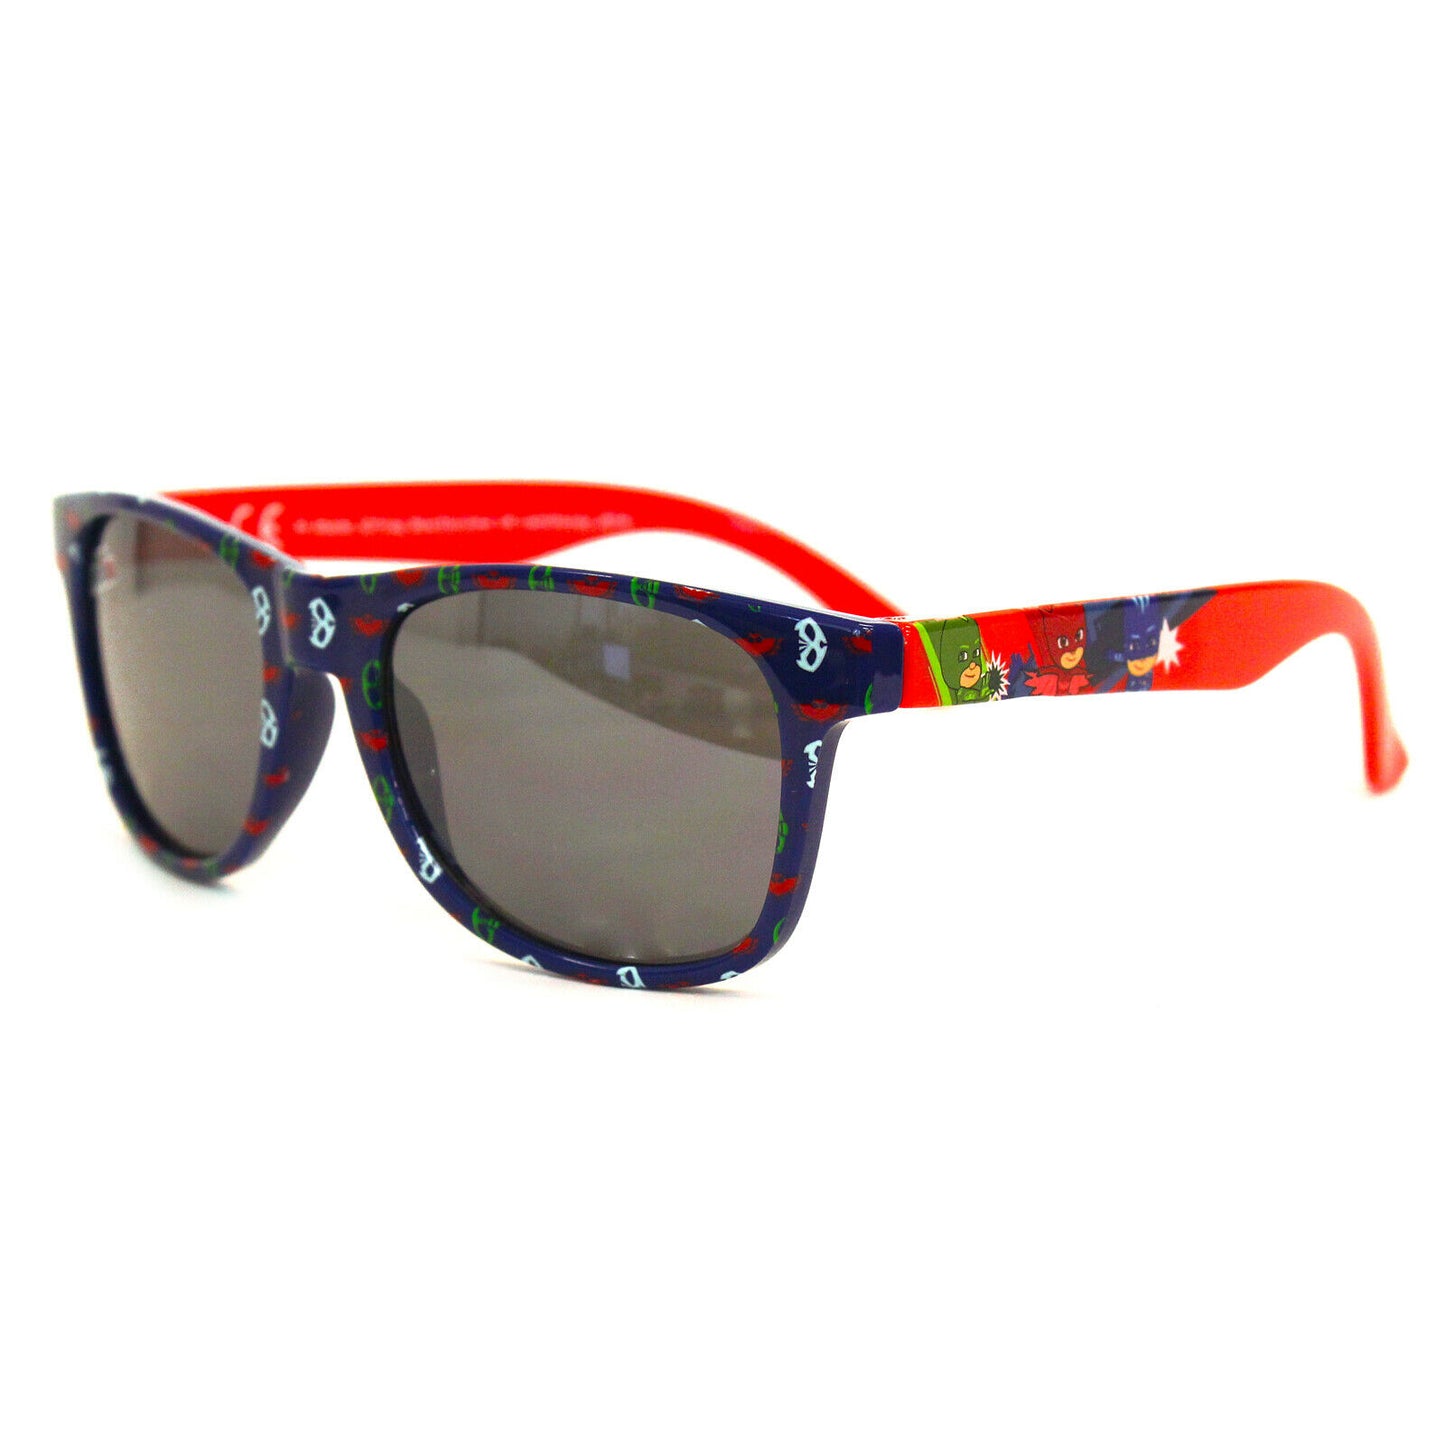 Boys PJ masks Sunglasses UV 100% protection